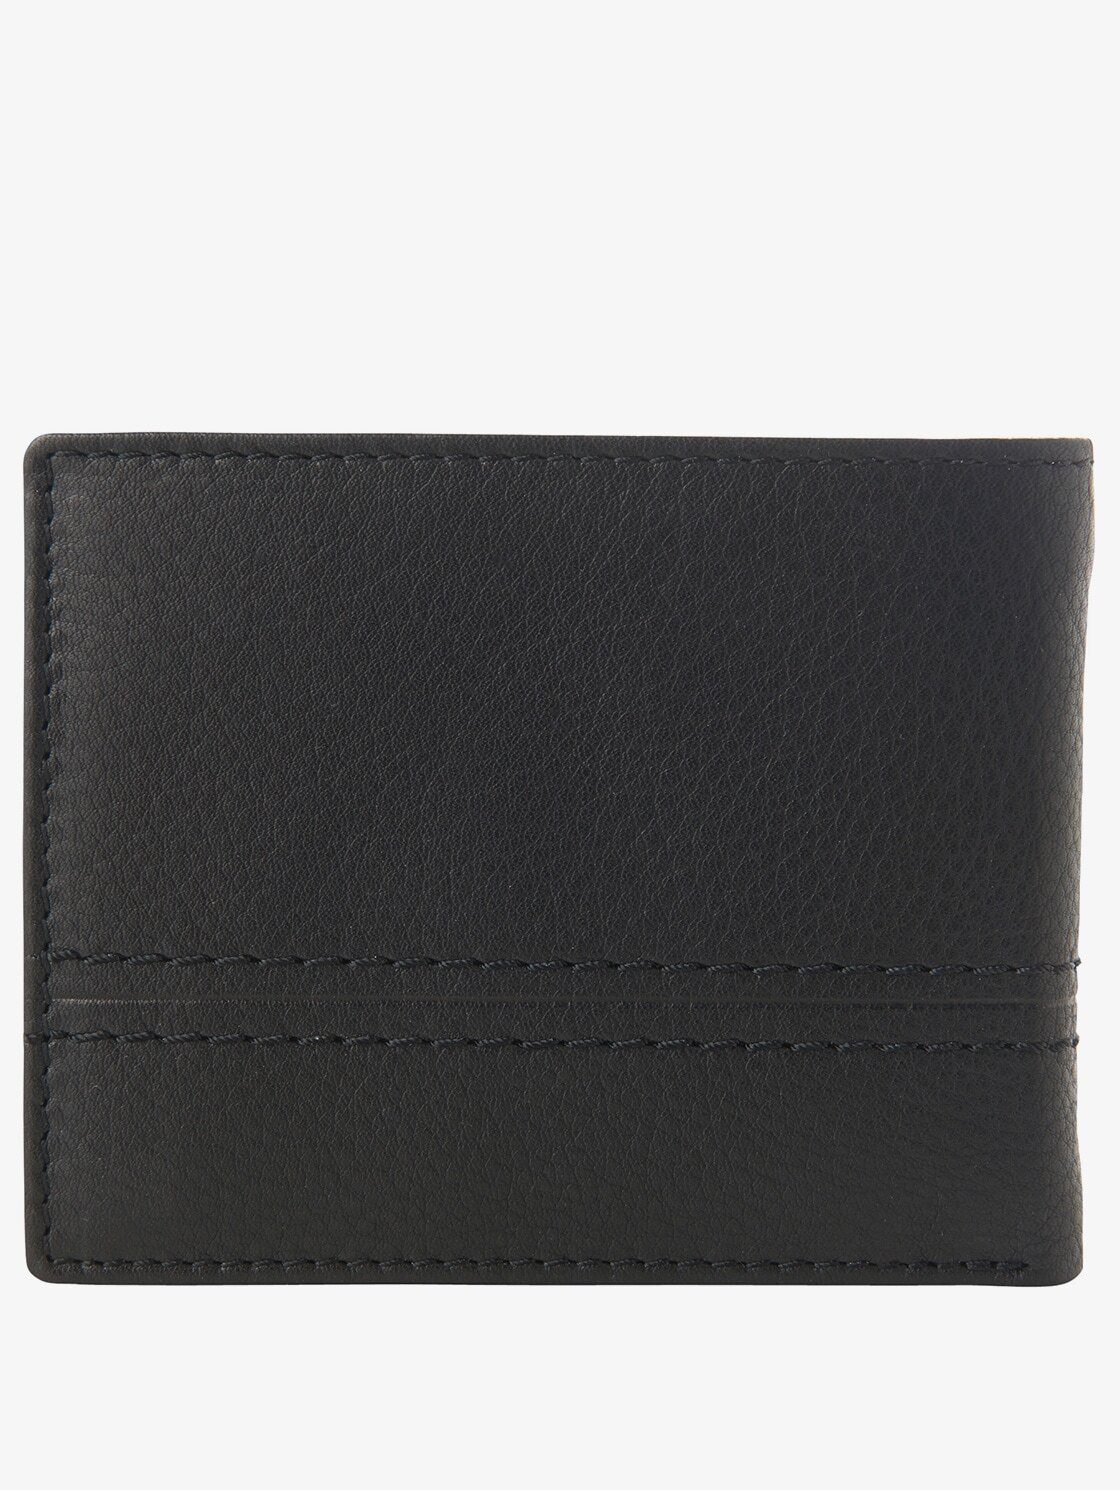 TOM TAILOR Geldbörse Portemonnaie black schwarz aus Leder 